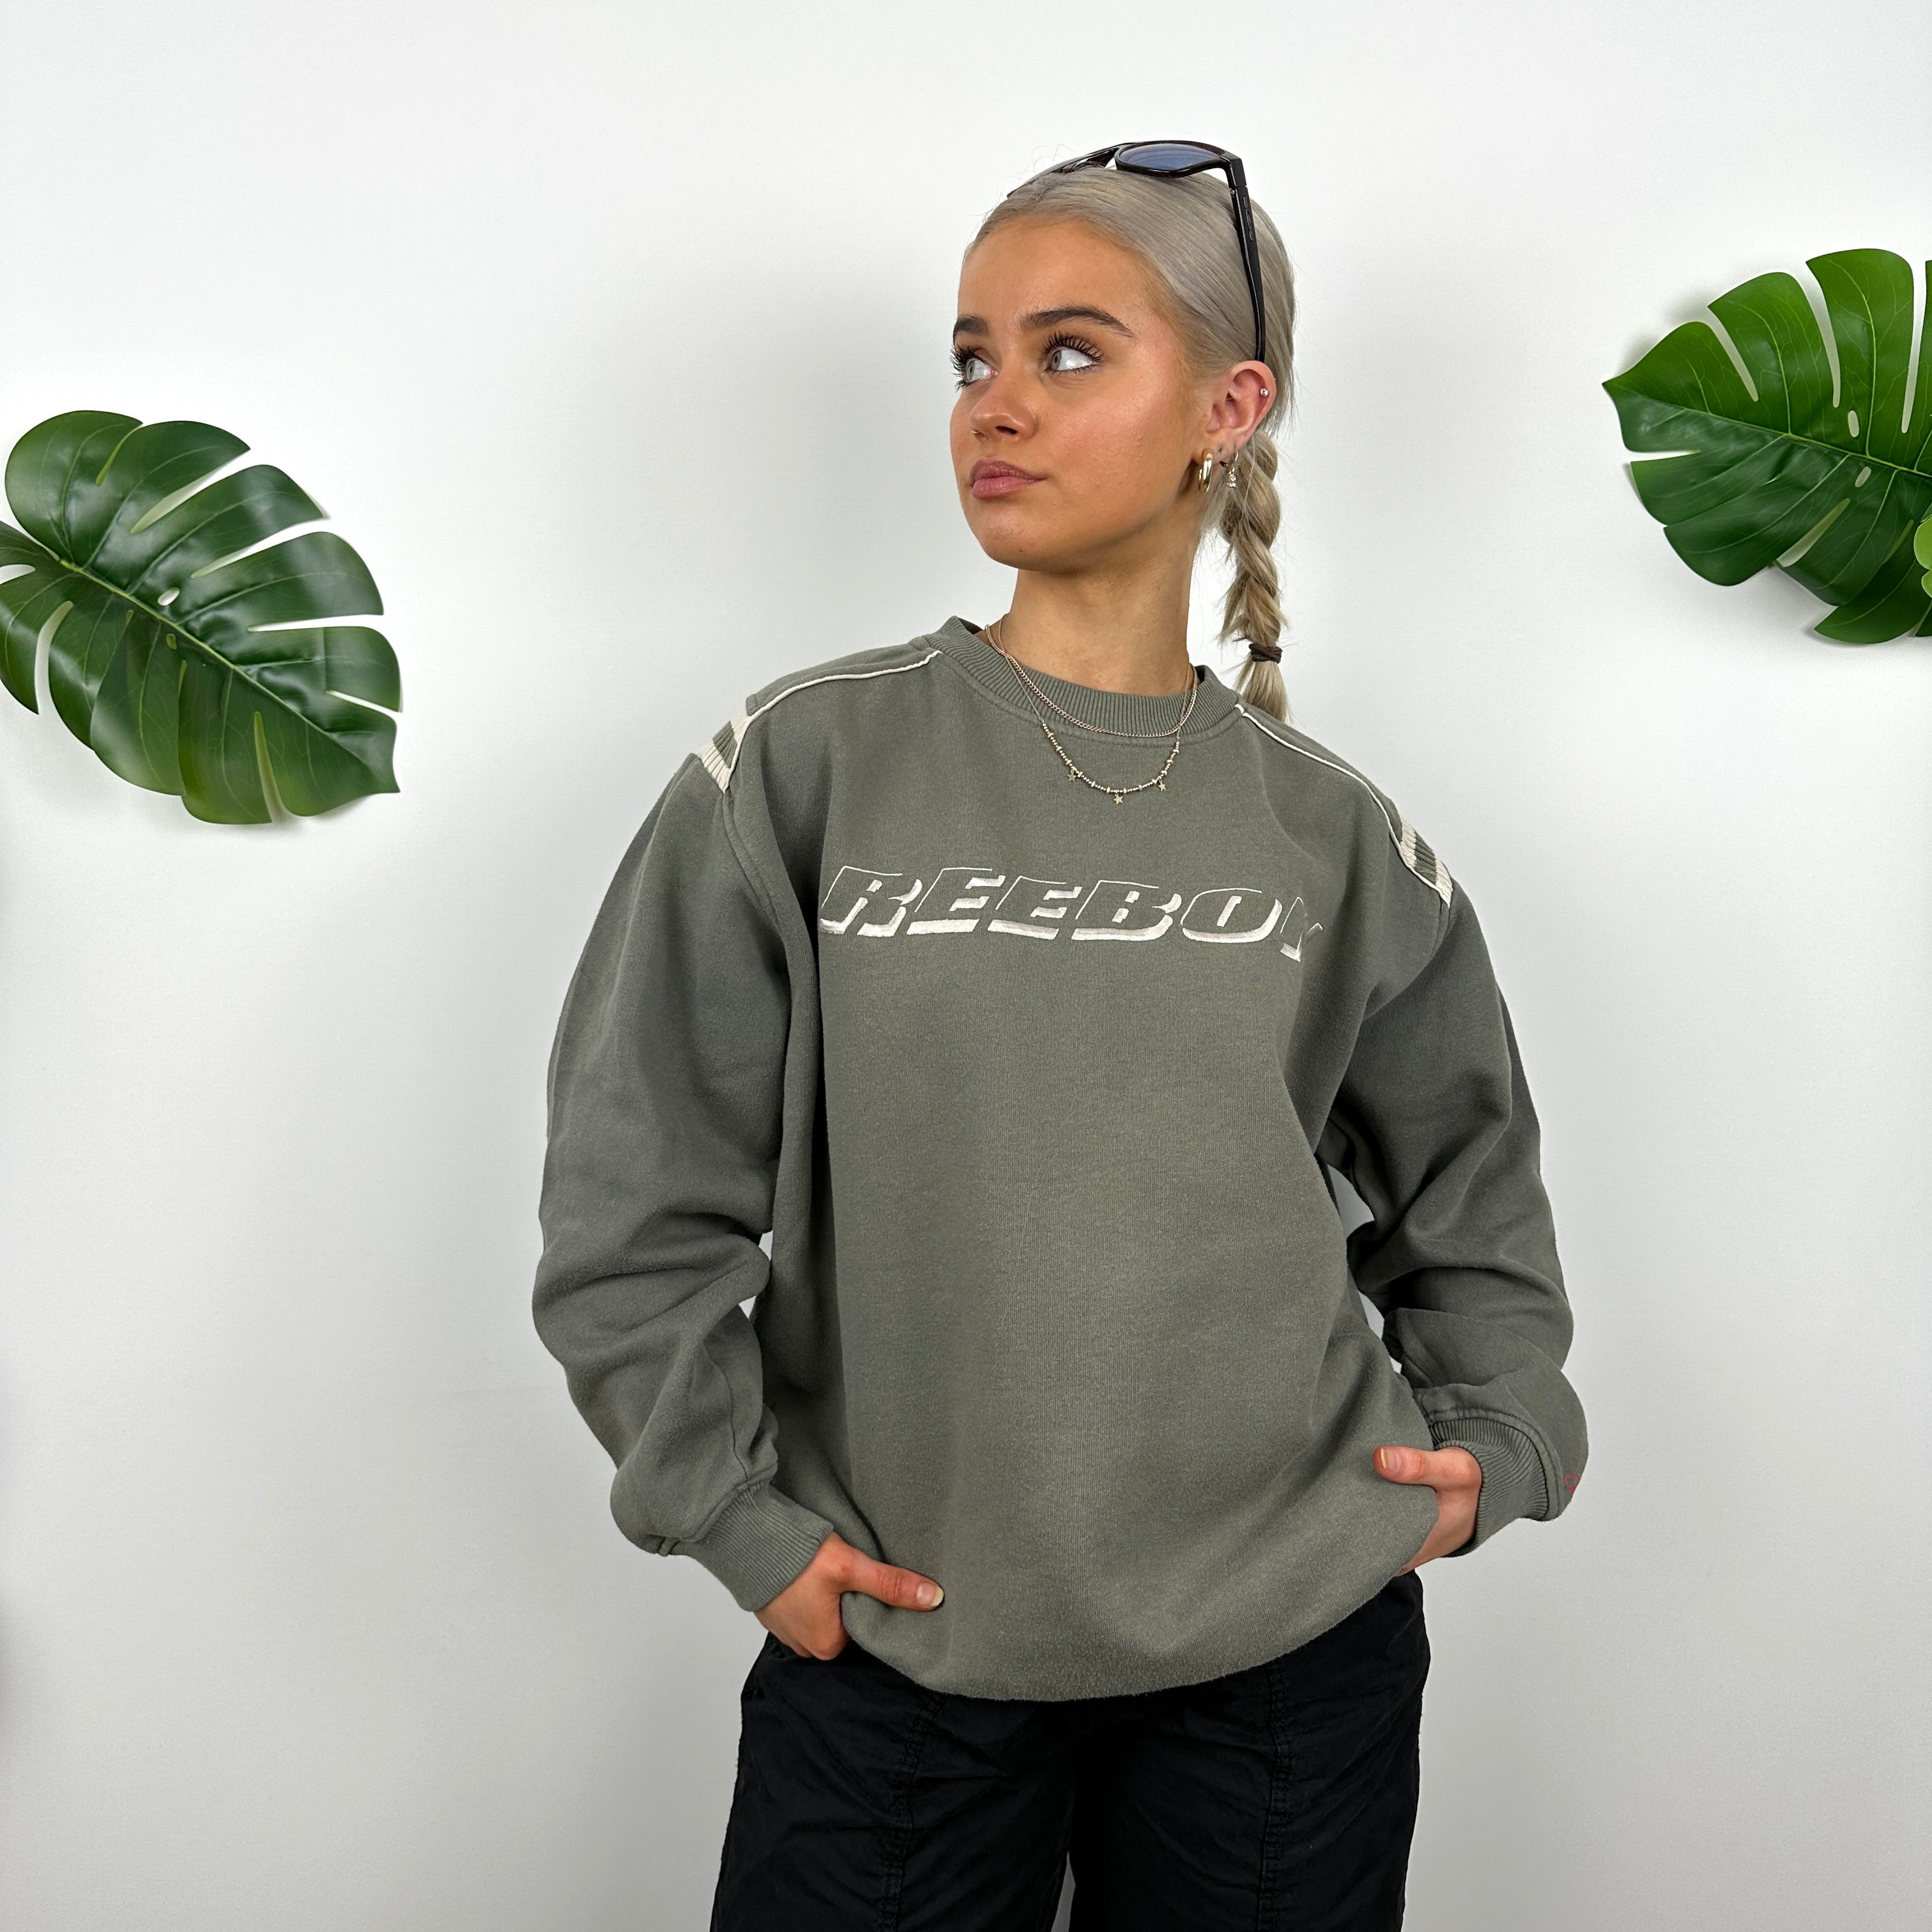 Reebok Khaki Embroidered Spell Out Sweatshirt (M)